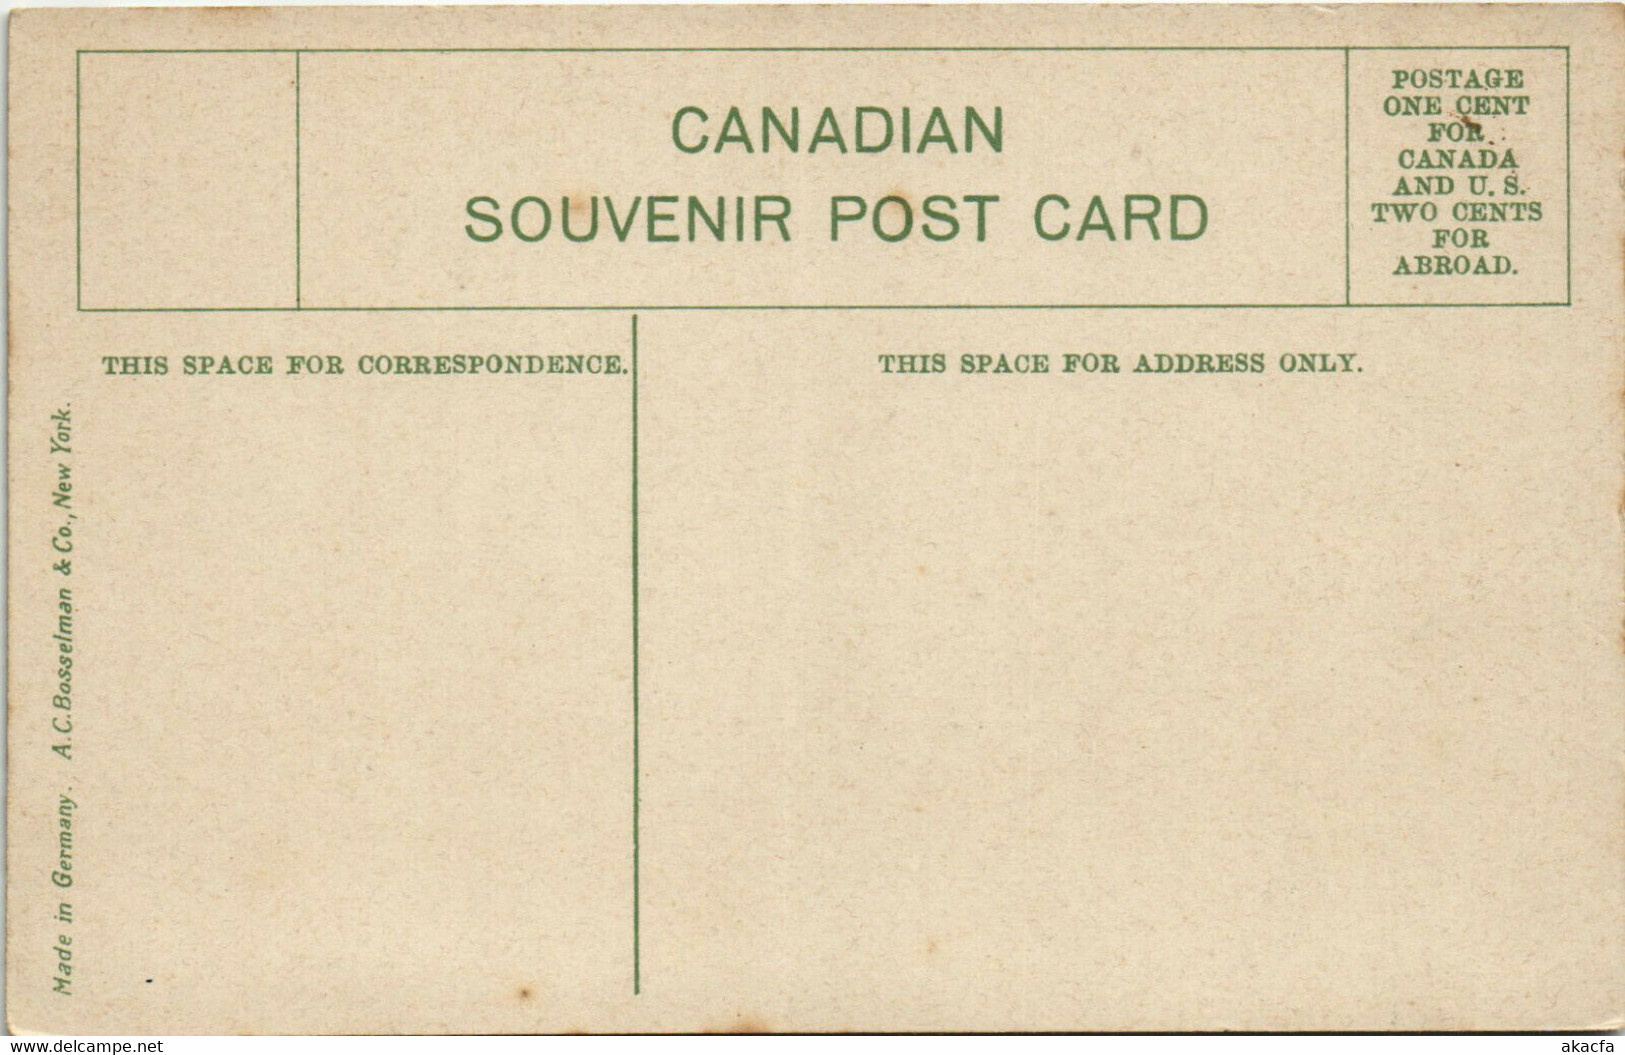 PC CANADA, WINDSOR, SANDWICH STREET, Vintage Postcard (b32113) - Windsor